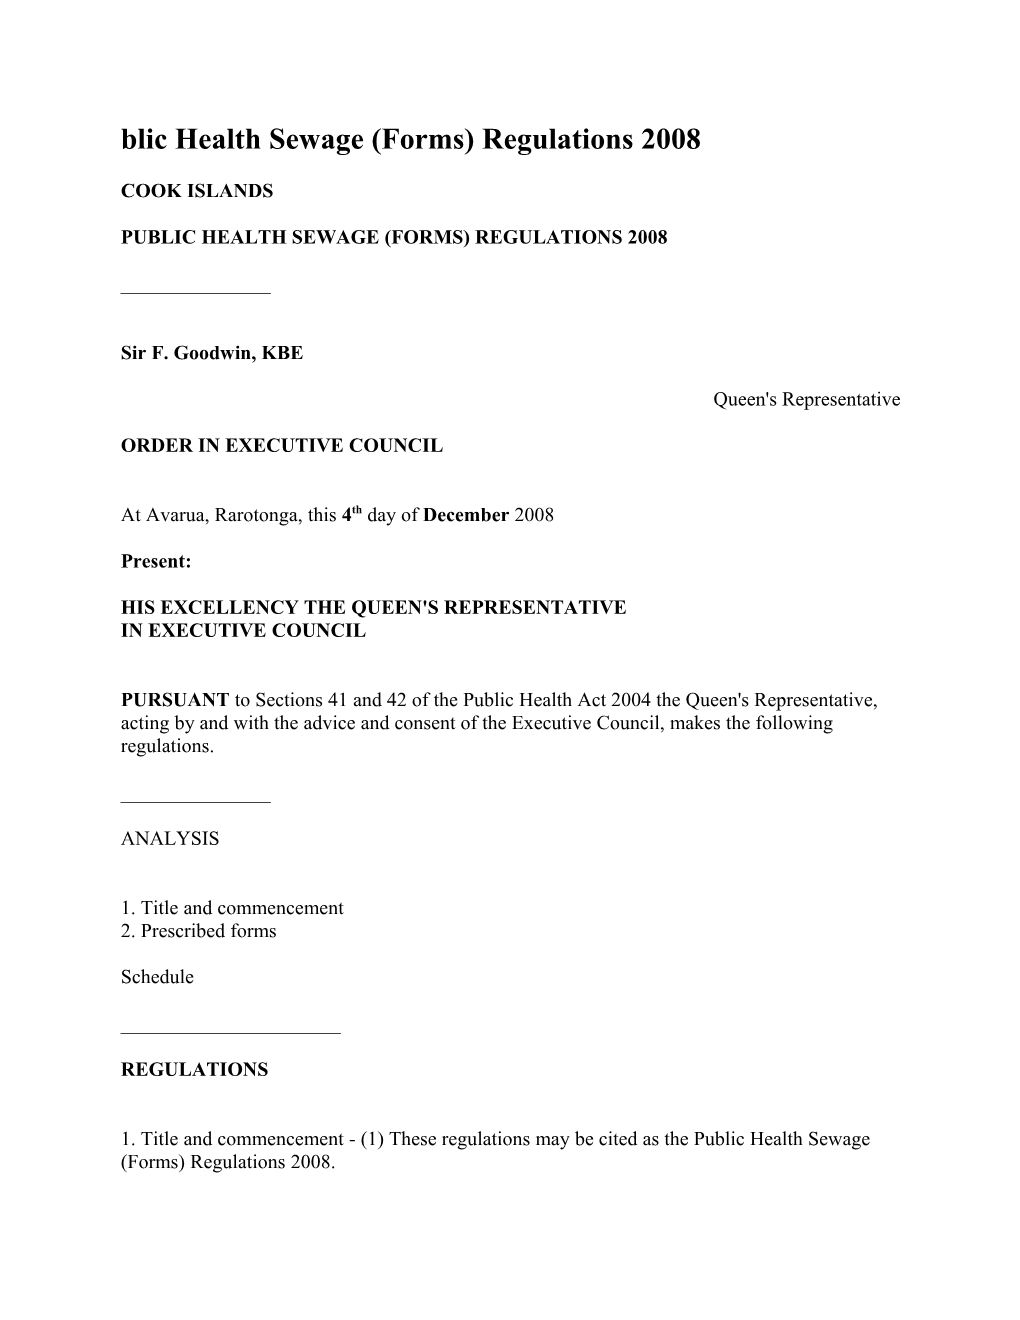 Blic Health Sewage (Forms) Regulations 2008